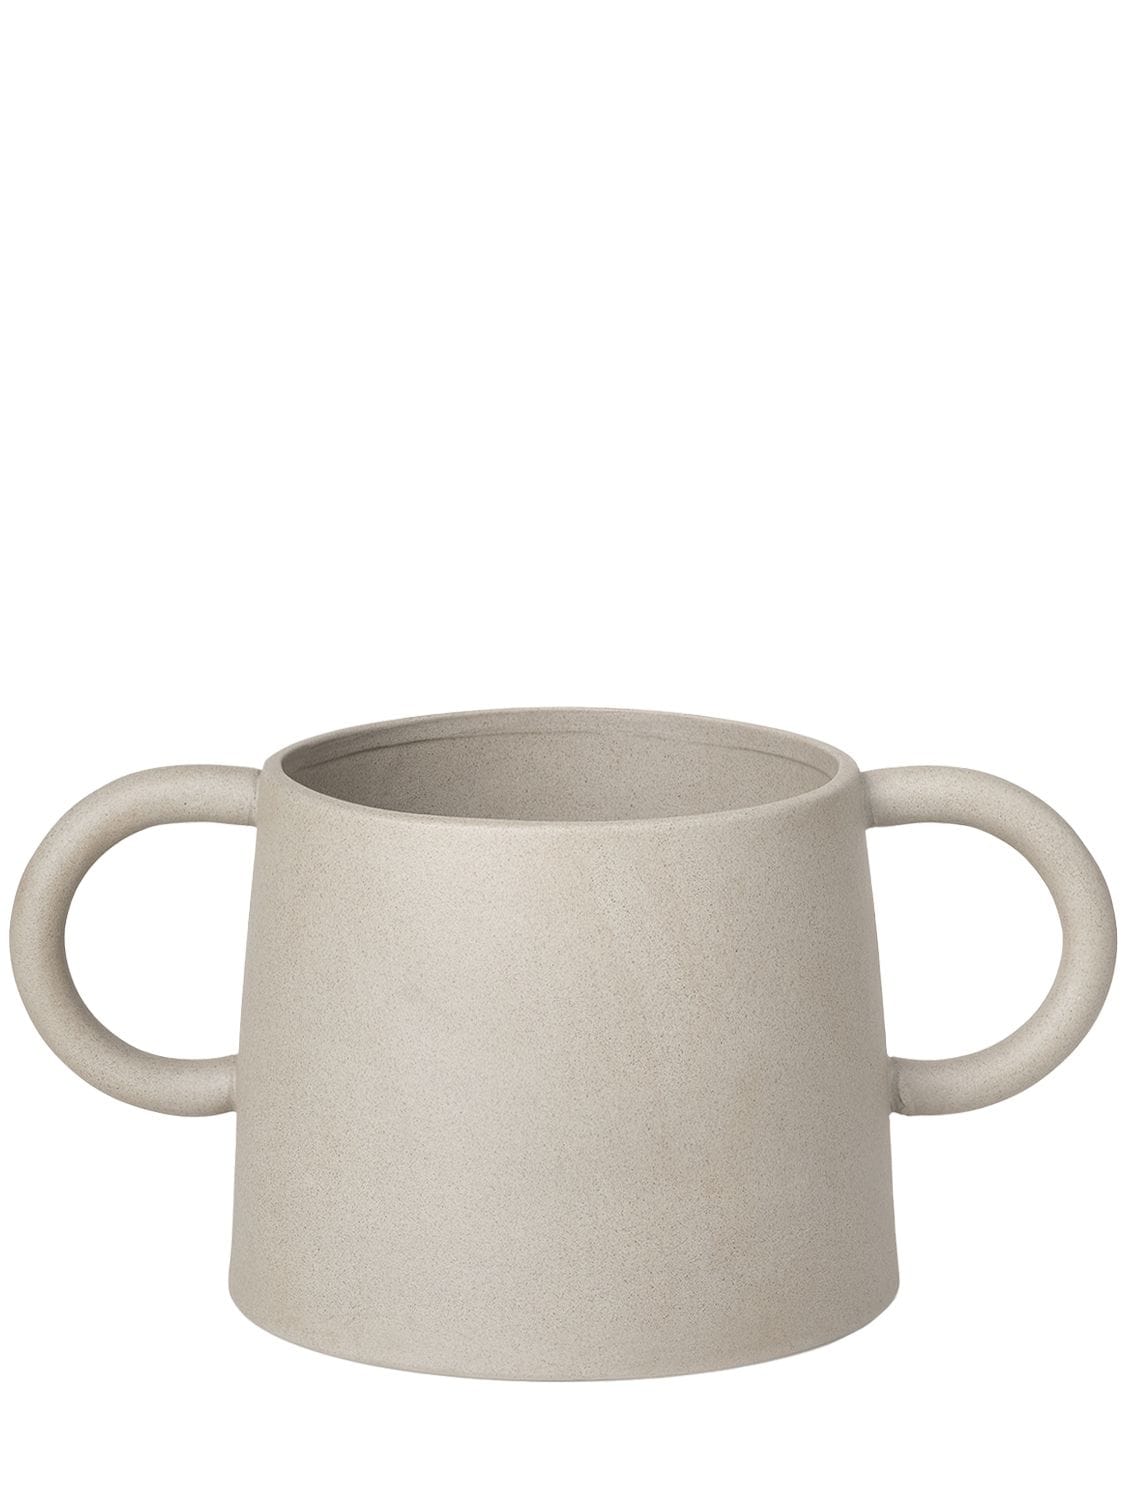 Image of Anse Porcelain Pot